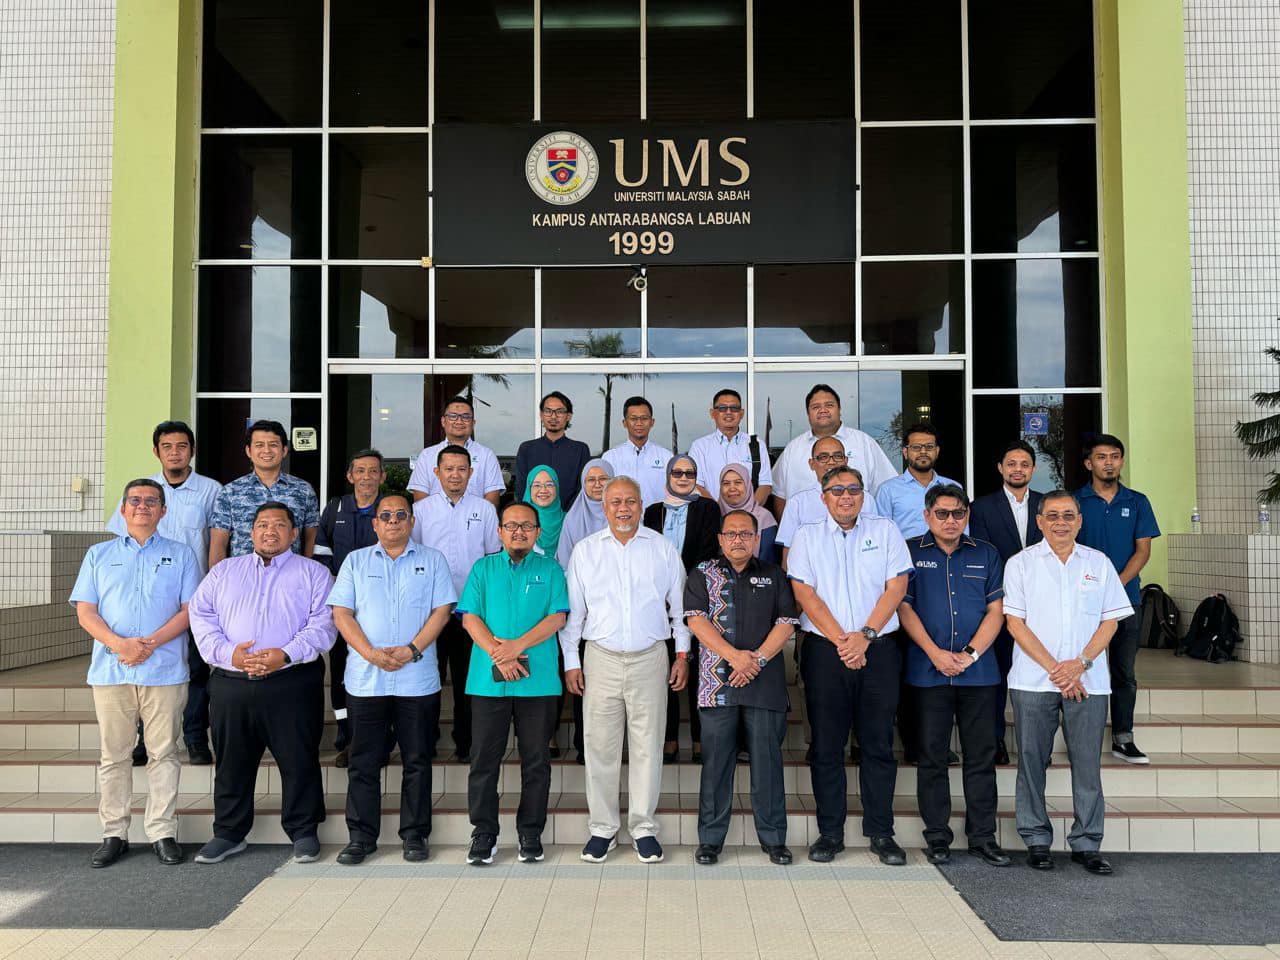 Session Engagement with Industry for The Implementation Agenda of TVET Borneo (Offering TVET Programs Coastal UMPSA-UMS)